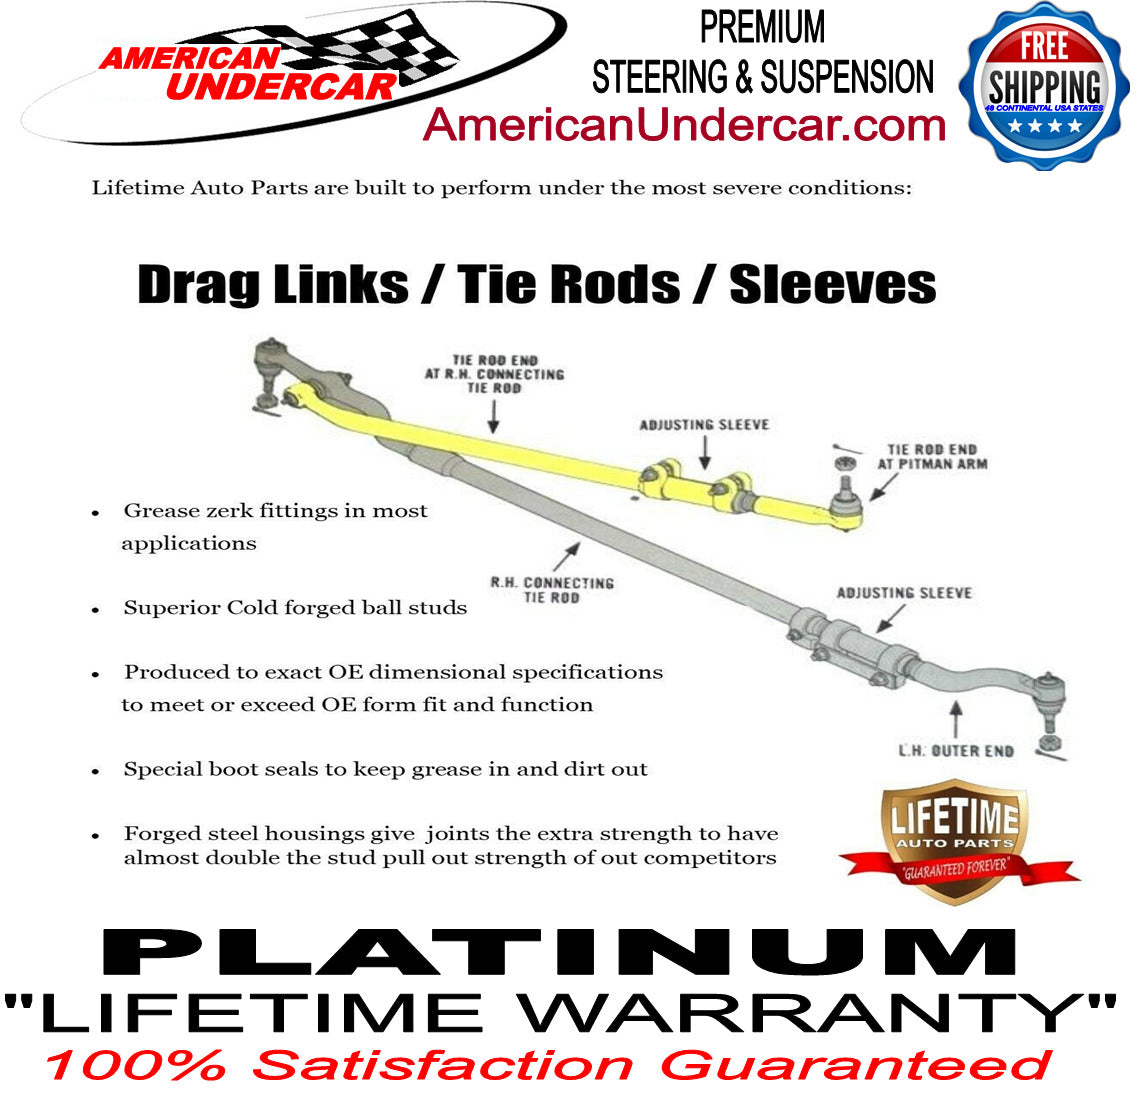 Lifetime Ball Joint and Tie Rod End Steering Kit for 2000-2003 Dodge Durango, Dakota 4x4